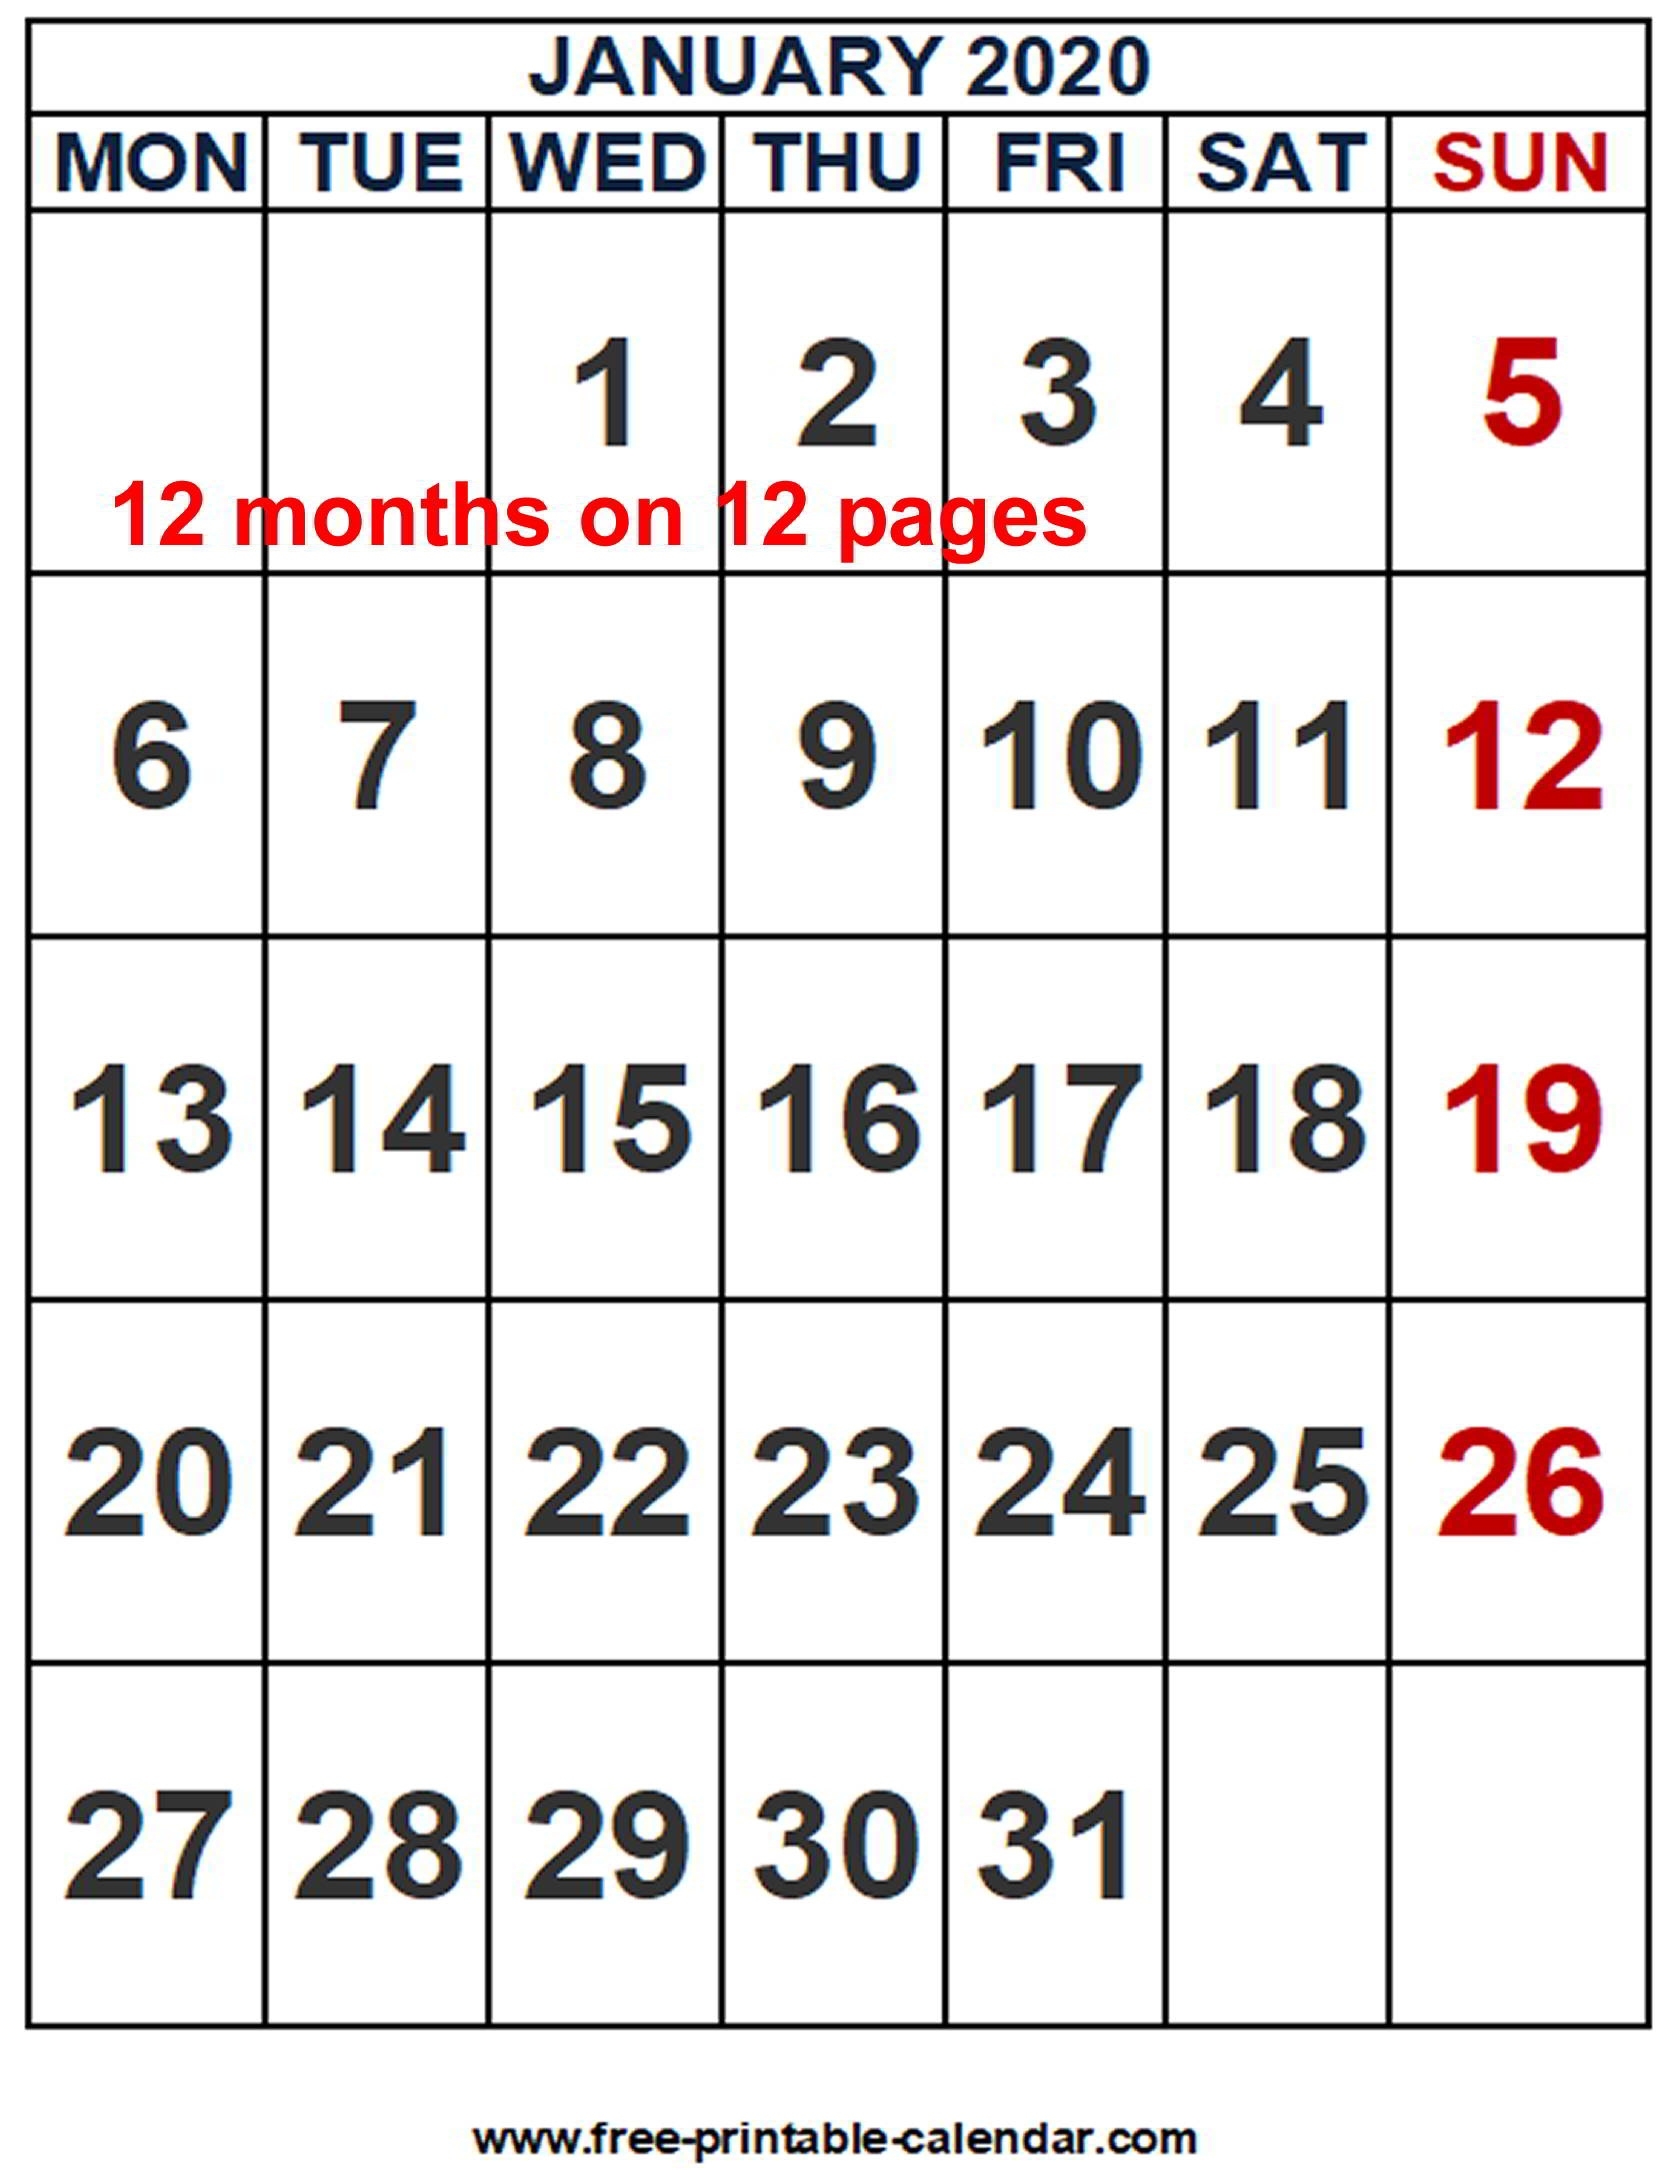 2020 Calendar Word Template - Free-Printable-Calendar Free Calendar Printable Three To Page